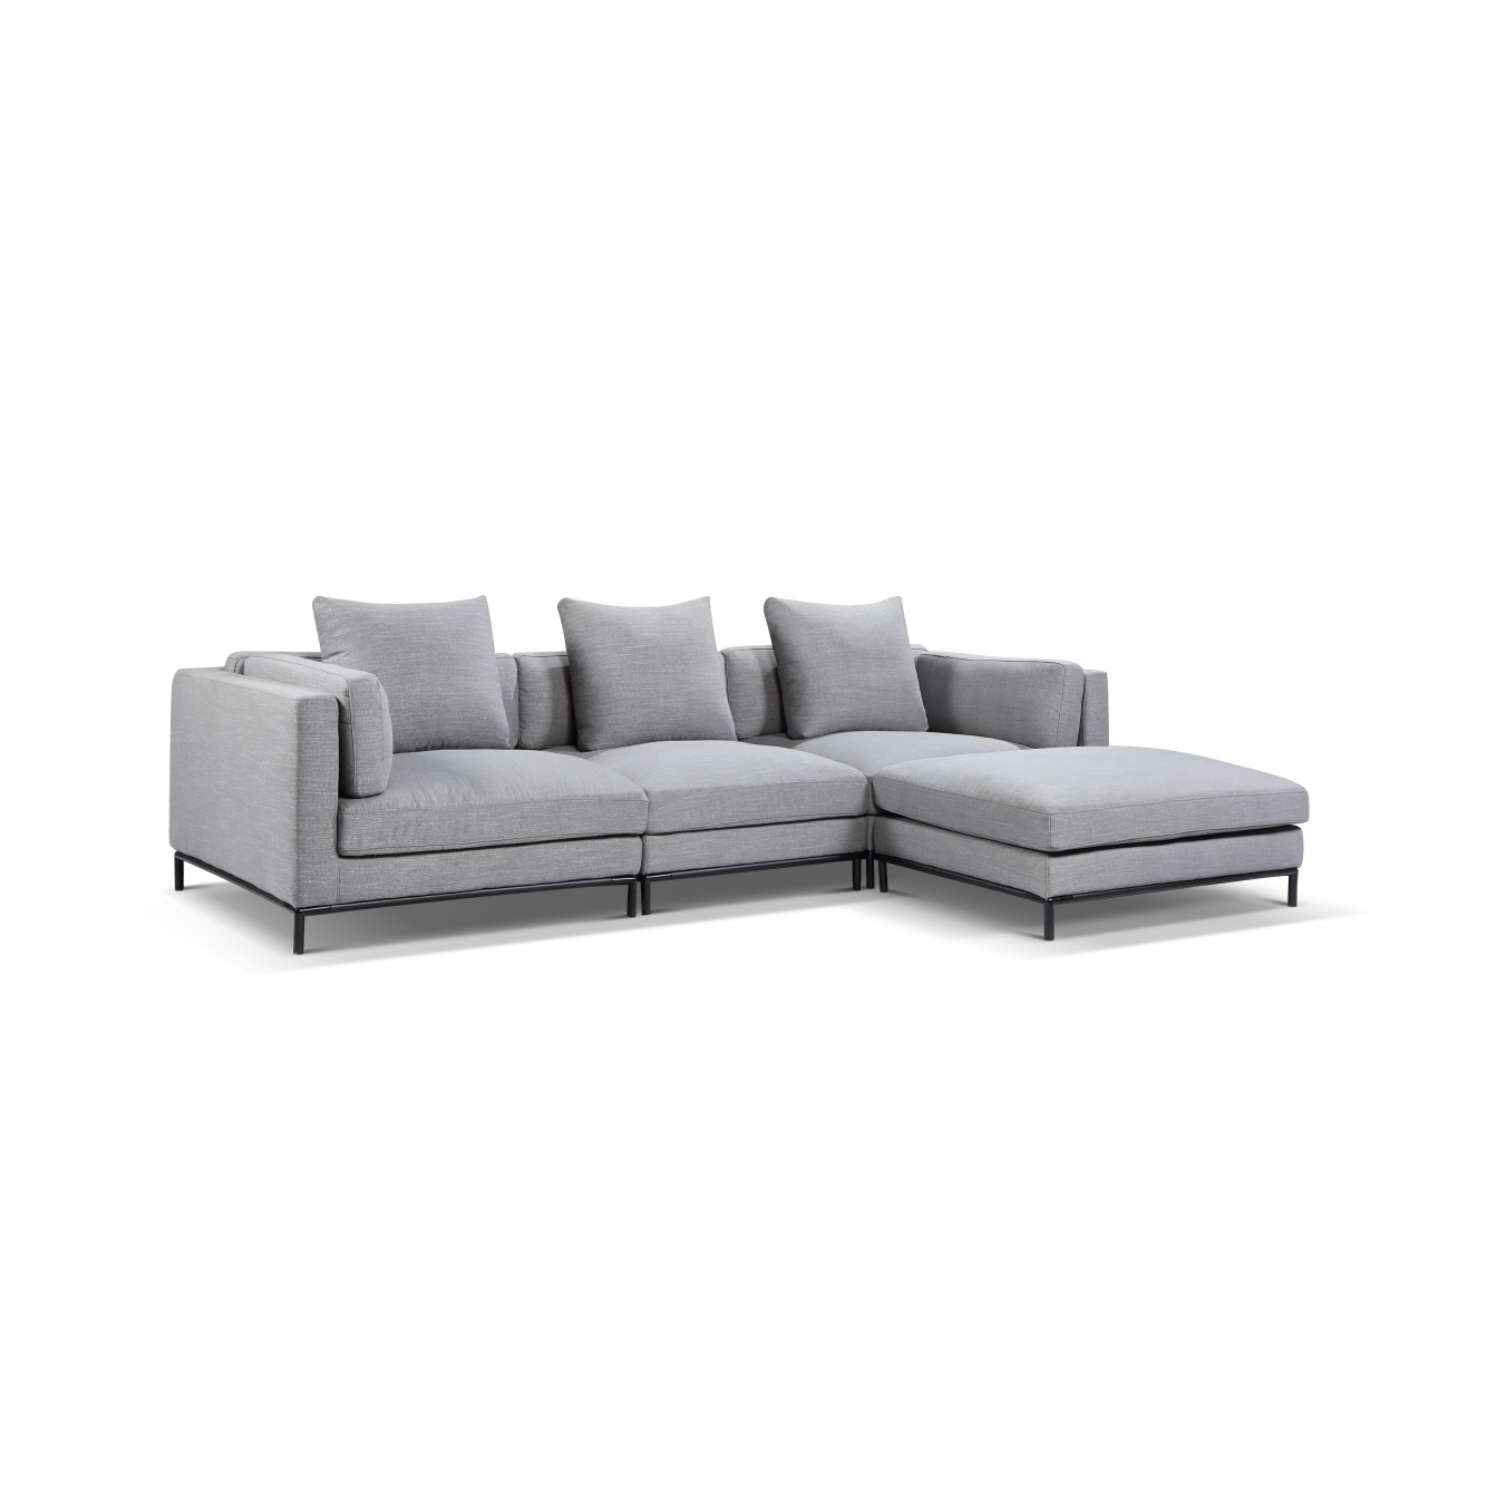 Migliore Sectional - Best Fabric Modular Sofa Design - Expand Furniture